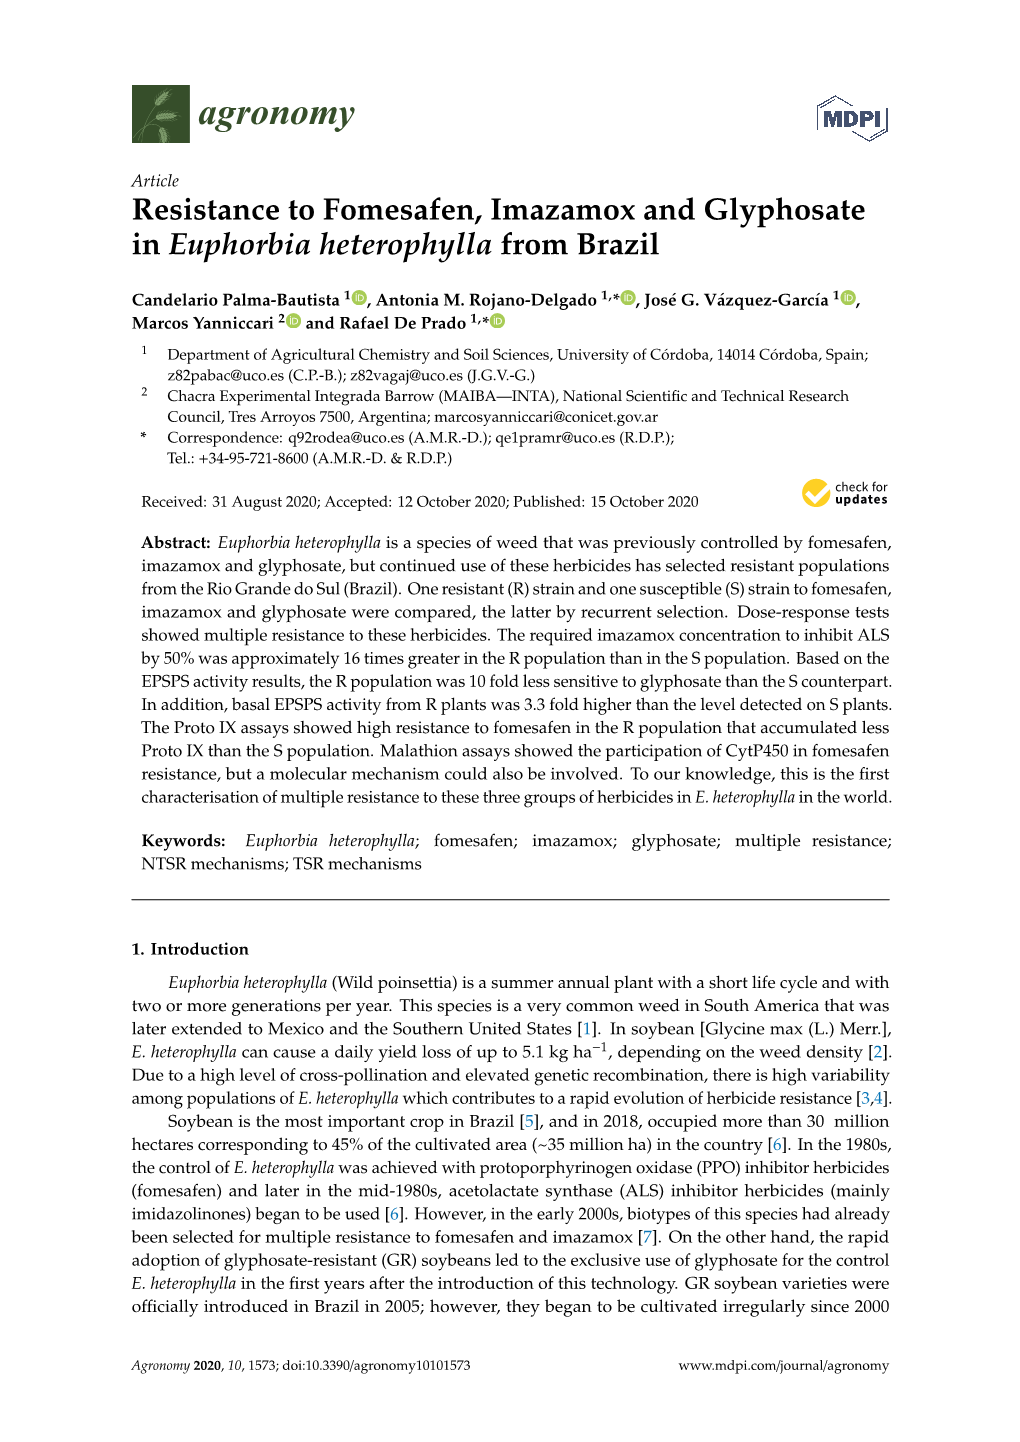 Resistance to Fomesafen, Imazamox and Glyphosate in Euphorbia Heterophylla from Brazil